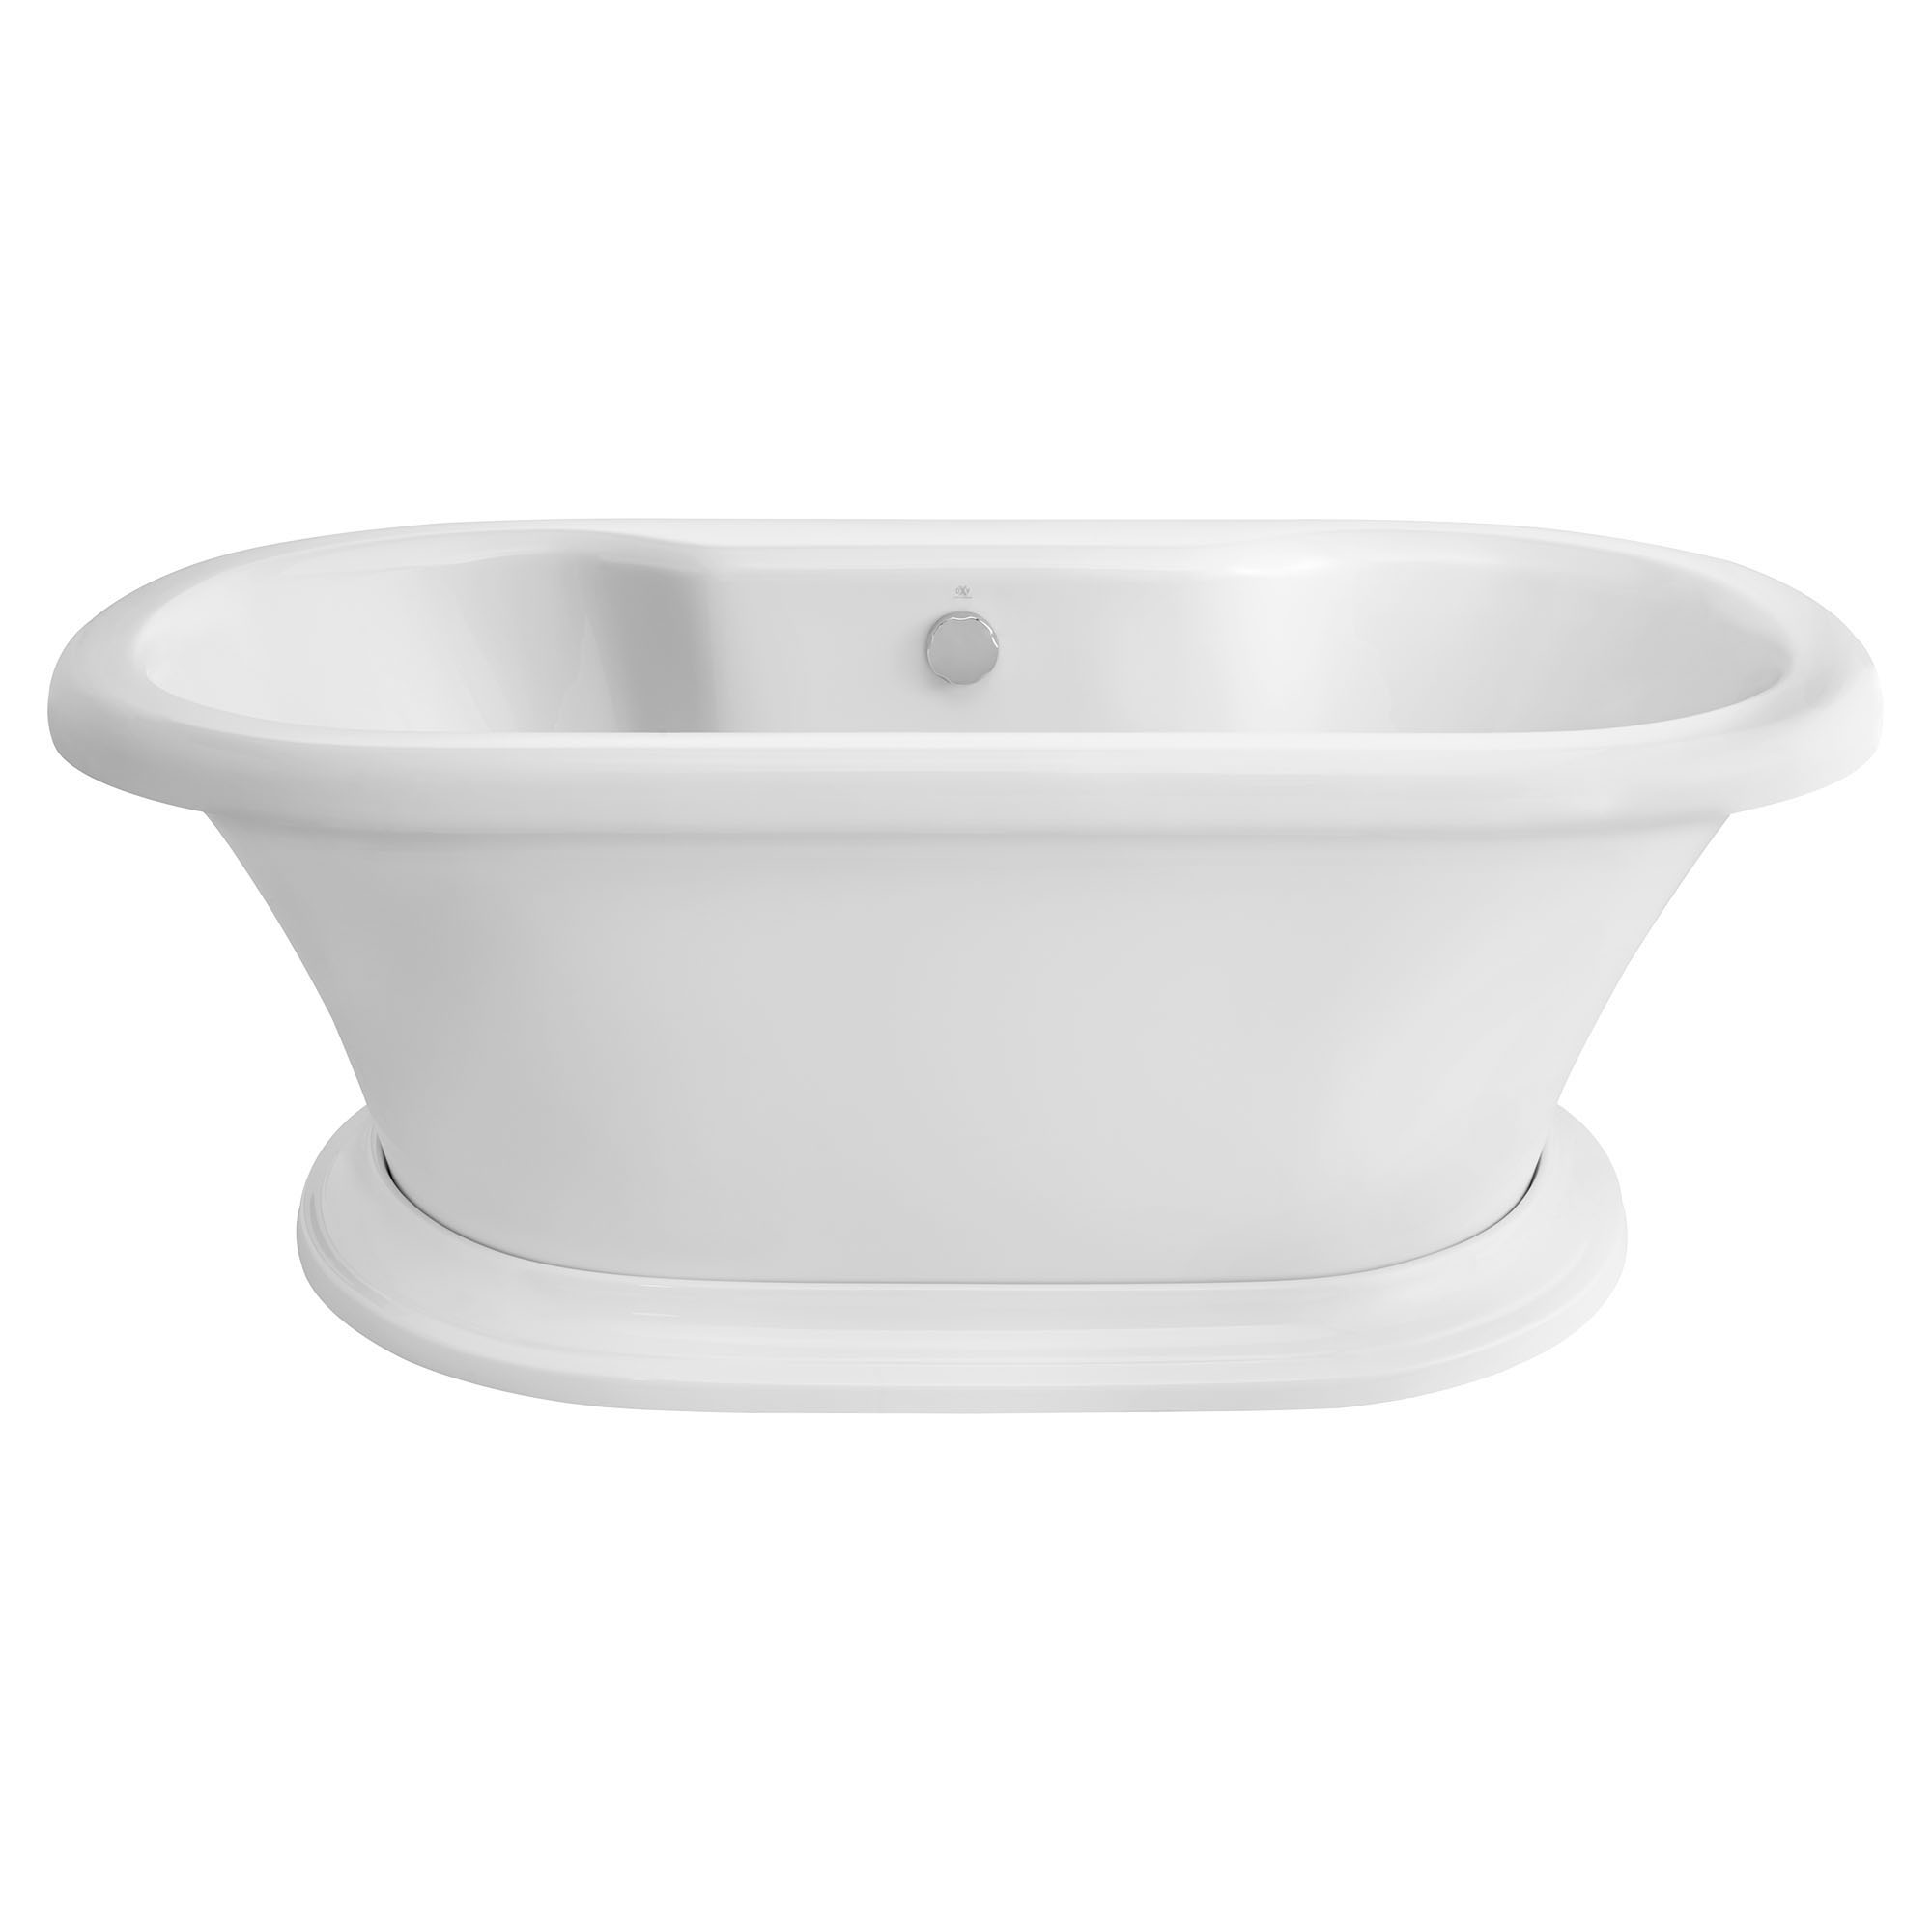 St. George 66-1/2x35-1/2x23-1/2" Freestanding Tub in White